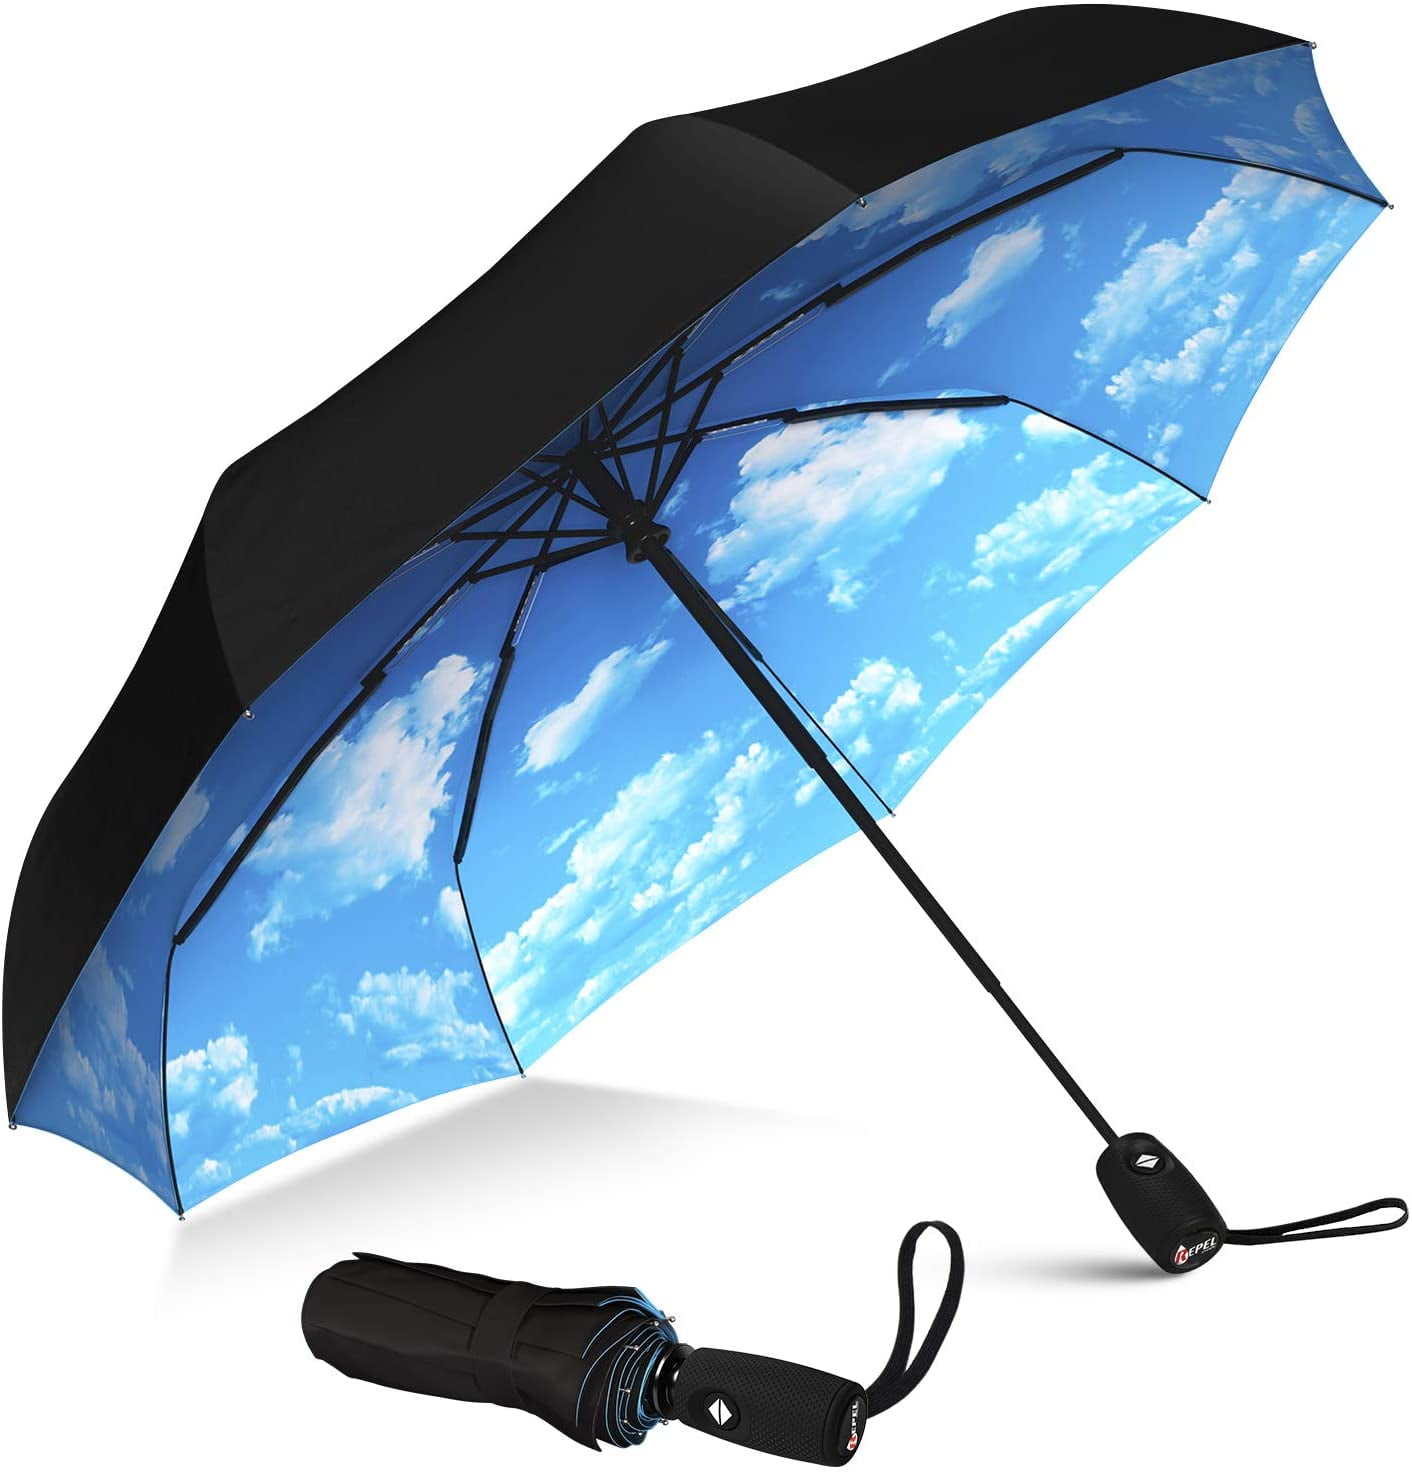 Waterproof,UV Protection Umbrella-Superior Automatic Umbrella Defies High Wind 